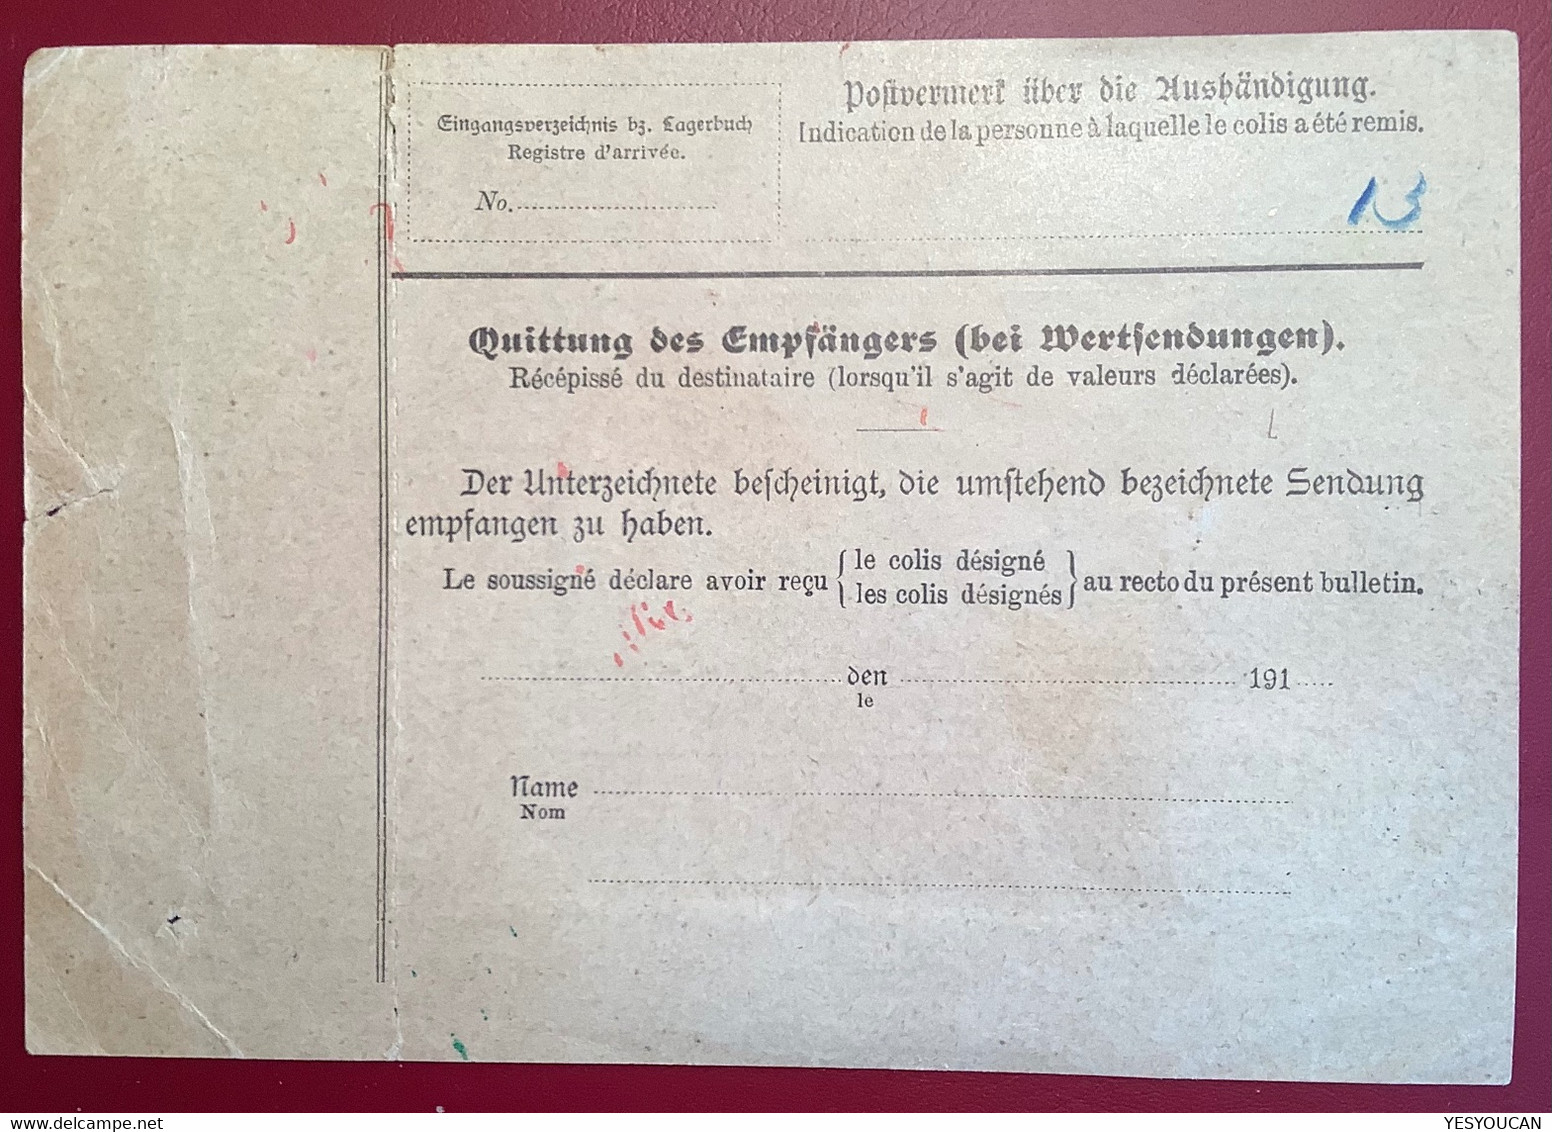 NEUSTADT HZGT COBURG 1915 Germania Mi 93 EF Paketkarte Via Basel>Nyon Schweiz (colis Postal Bayern - Cartas & Documentos